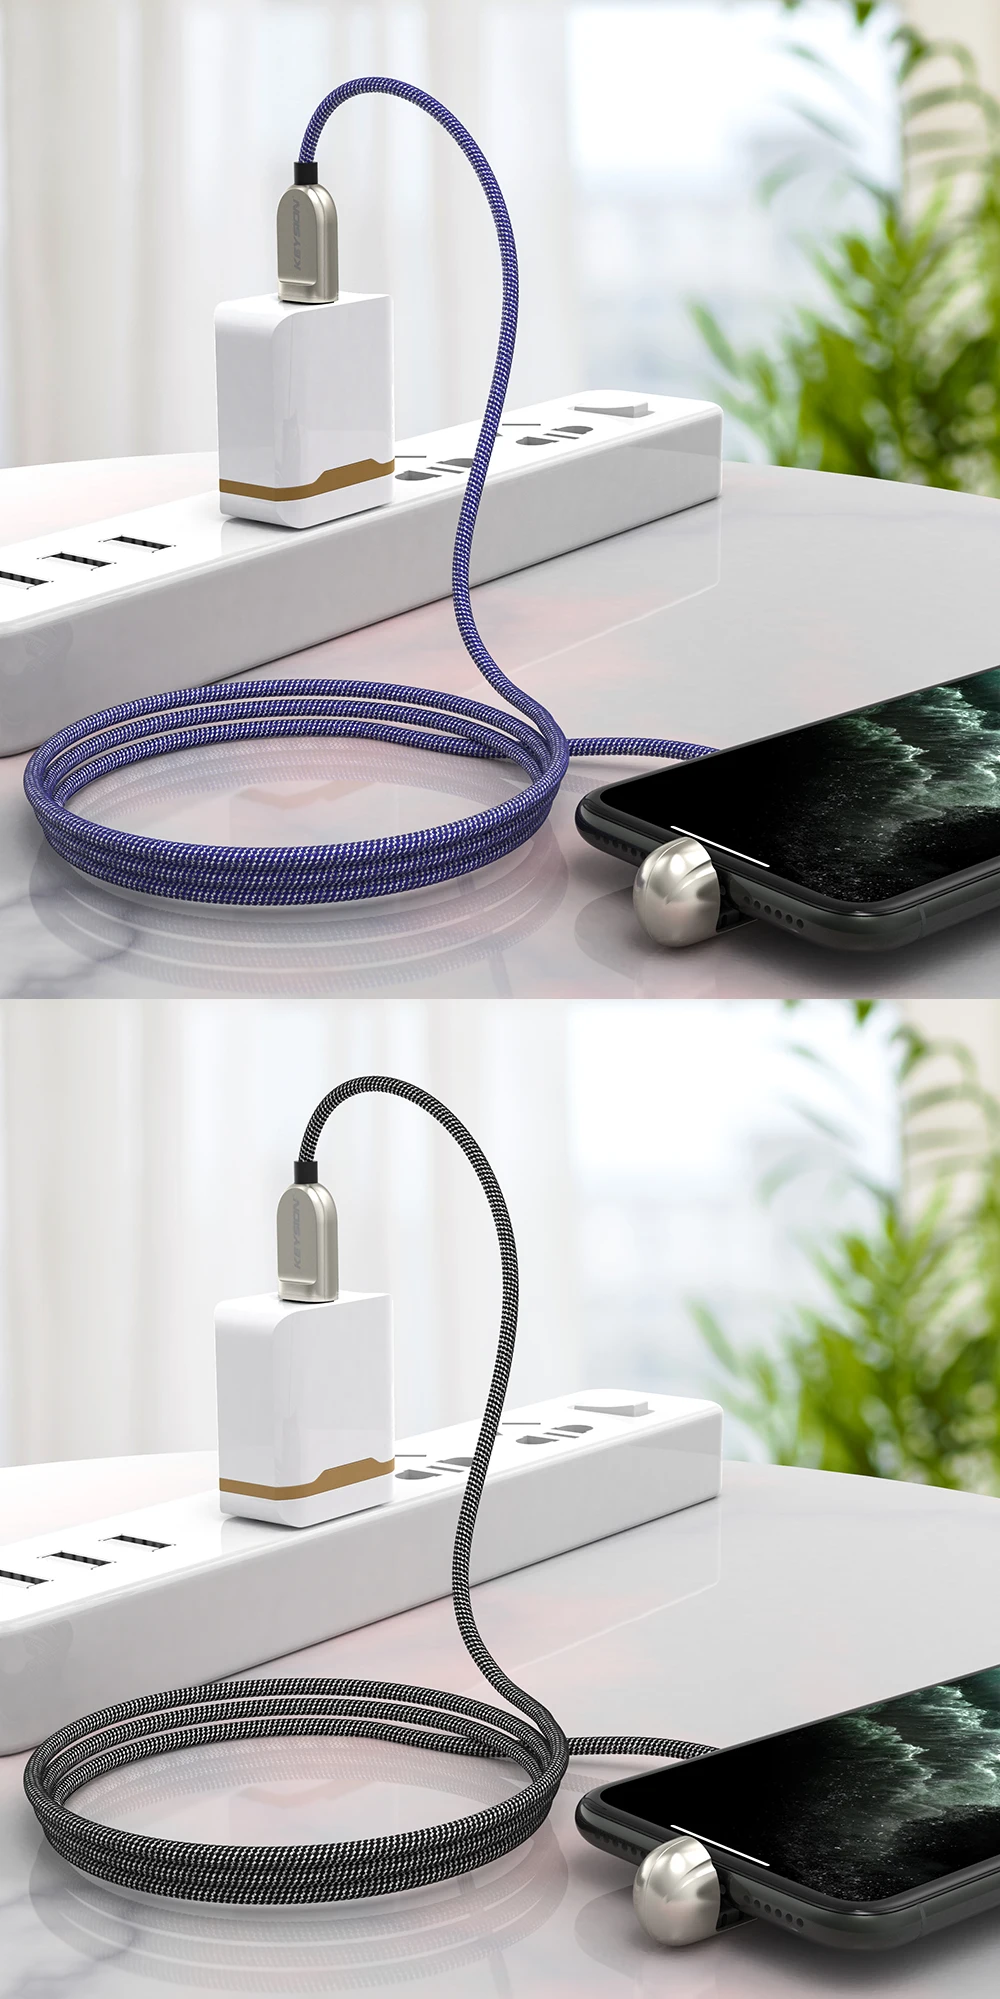 KEYSION кабель из цинкового сплава для iPhone 11 Pro Xs Max XR 6 7 8Plus 2.5A Быстрая зарядка USB кабель для зарядного устройства lightning шнур для передачи данных